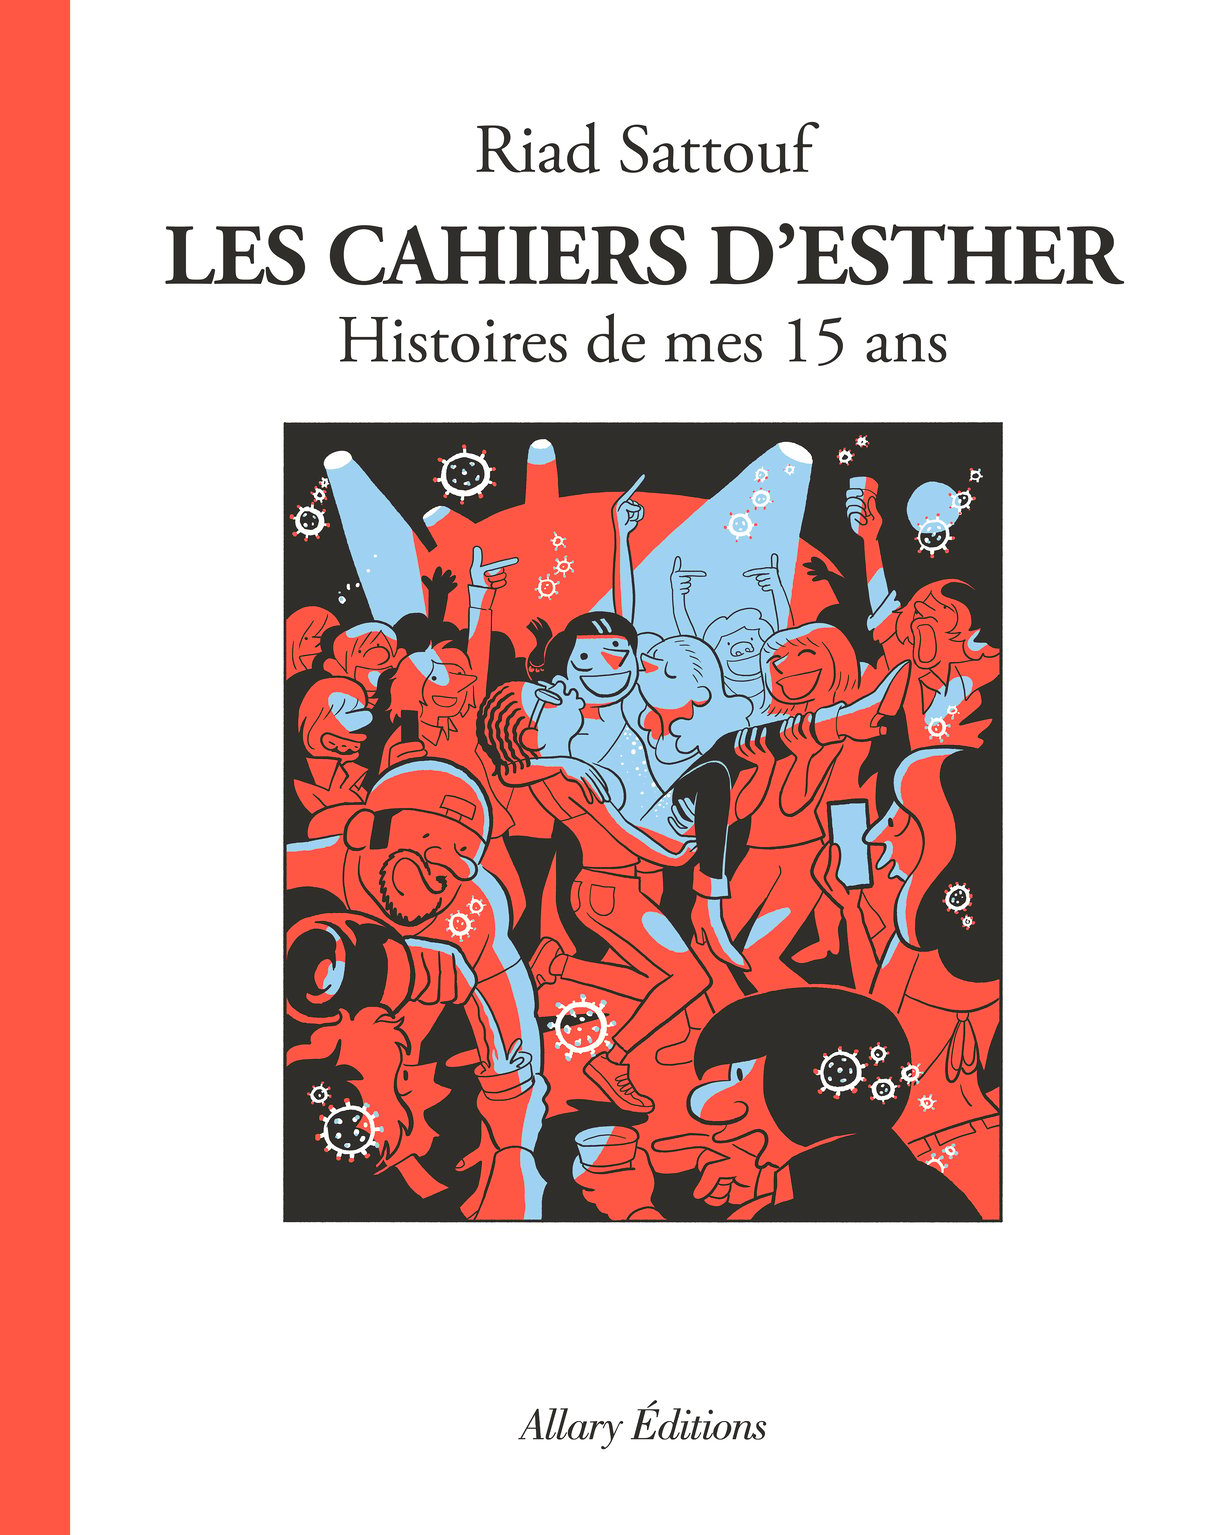 "Les cahiers d'Esther" de Riad Sattouf &copy; Allary éditions